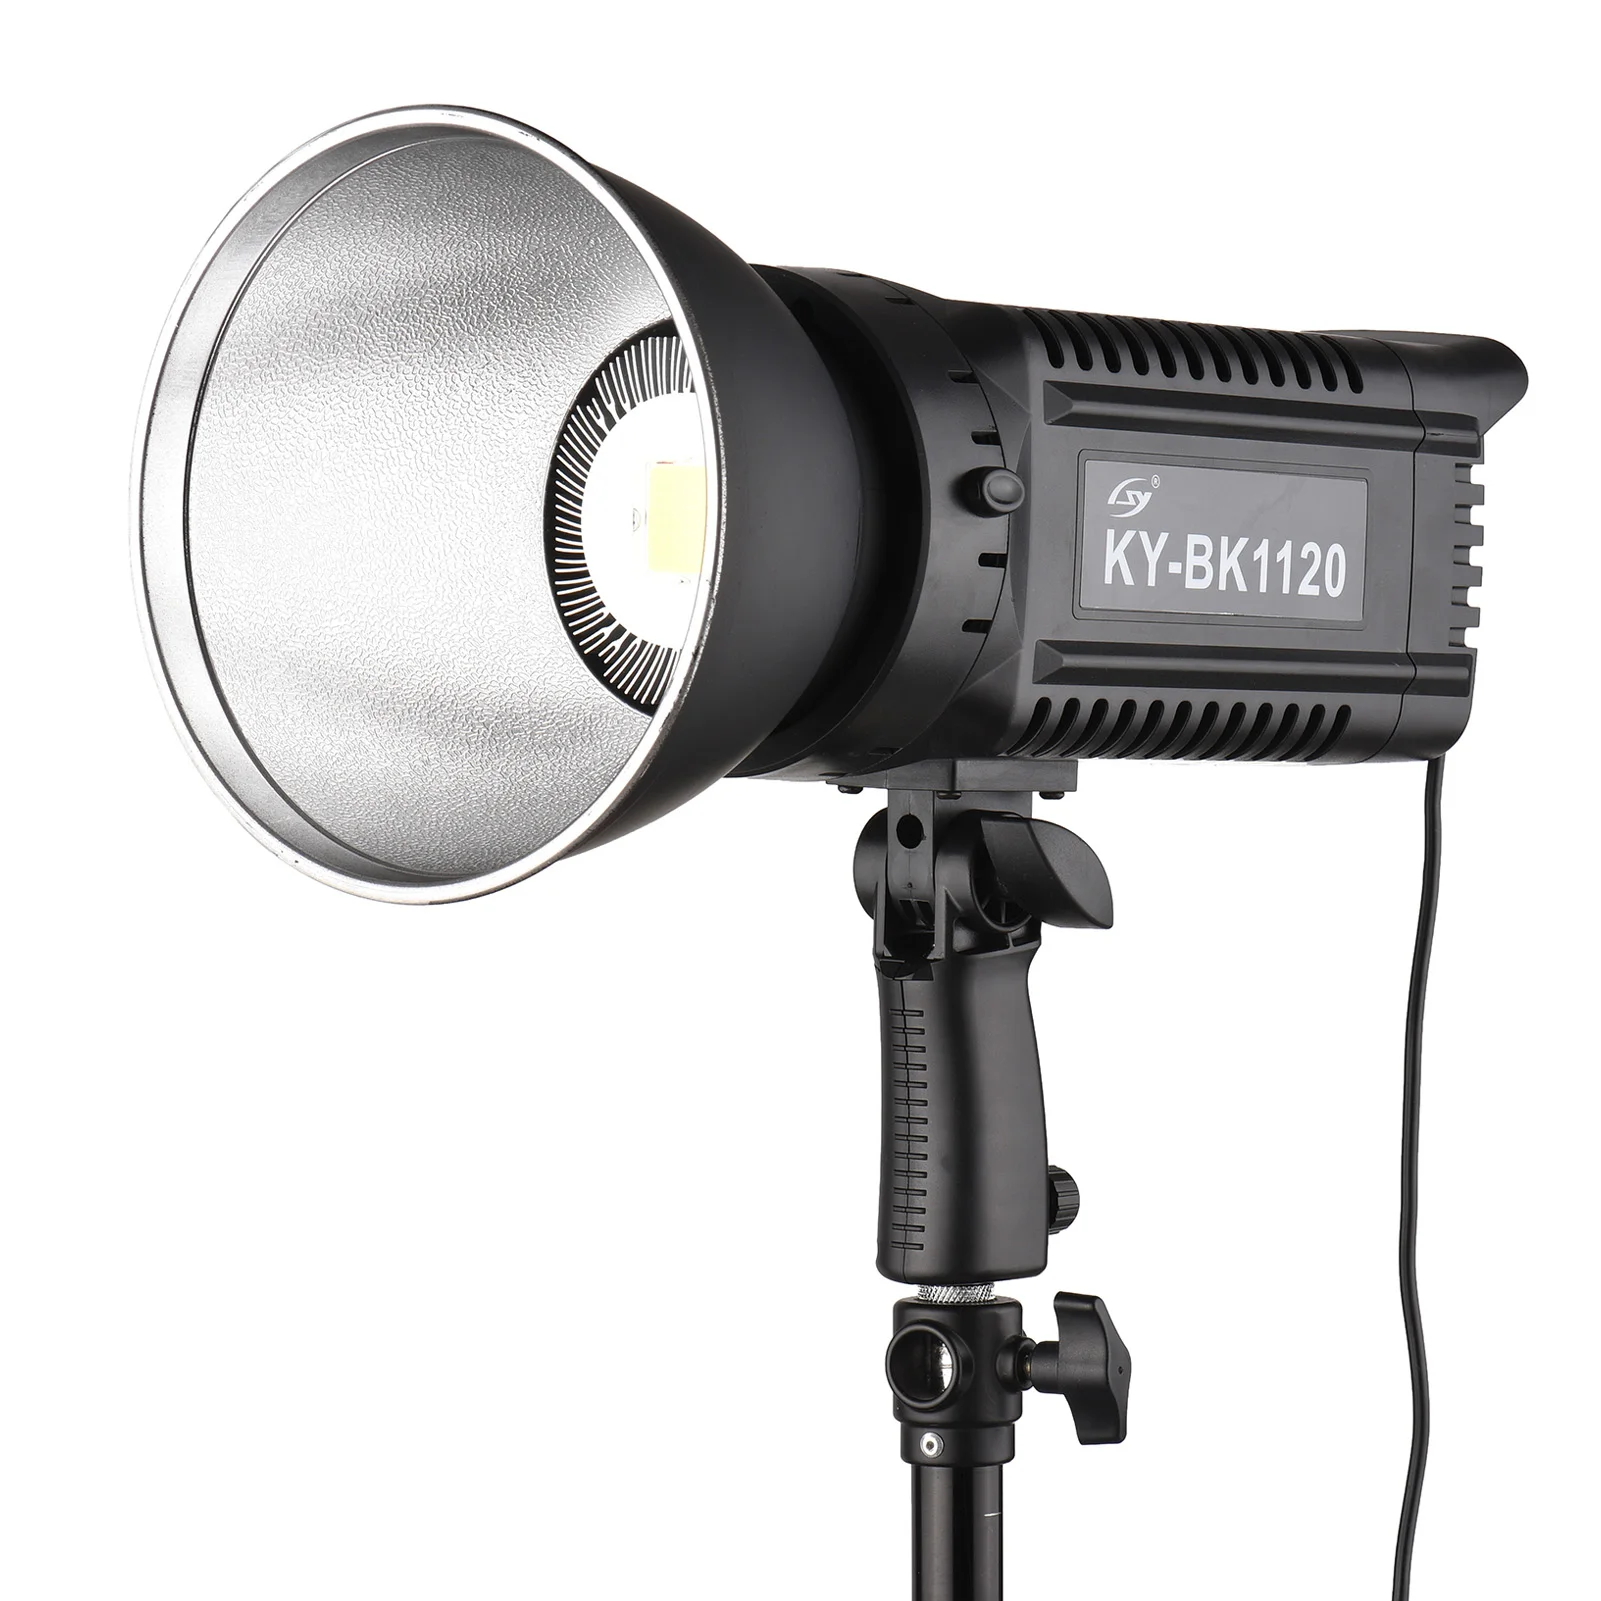 

150W Studio LED Video Light 5600K Color Temperature Adjustable Brightness CRI93+ TLCI95+ Bowens Mount with Protector Reflector